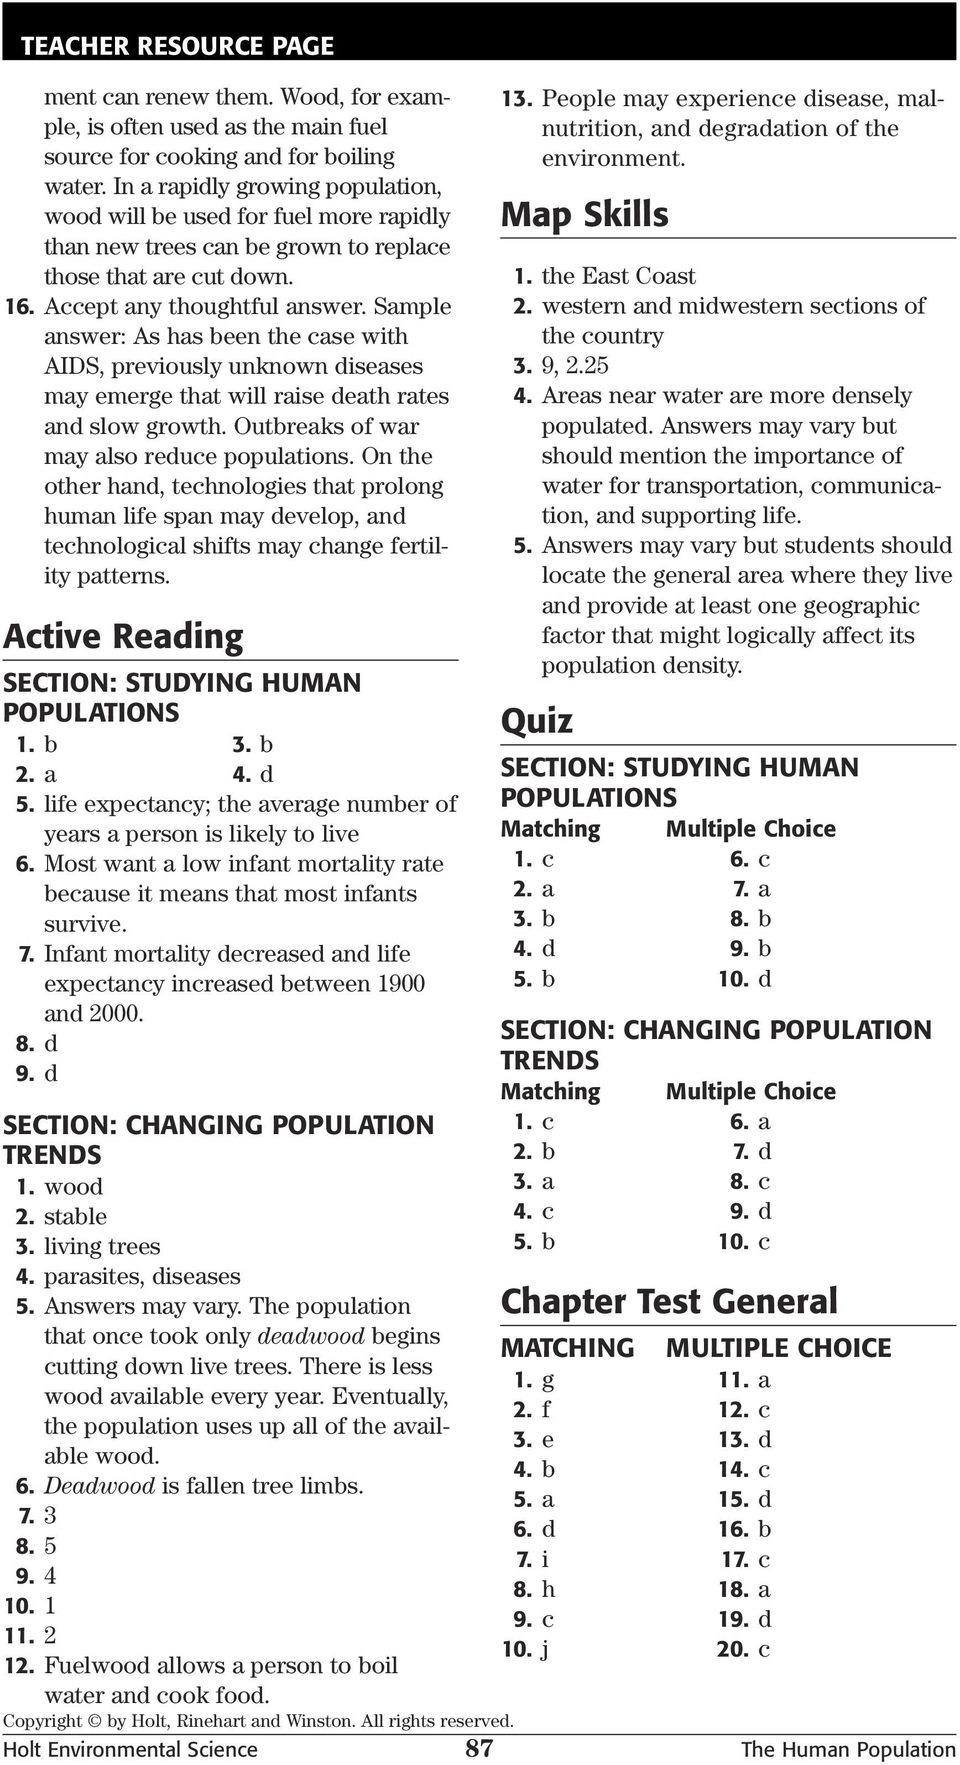 worksheet critical thinking pdf